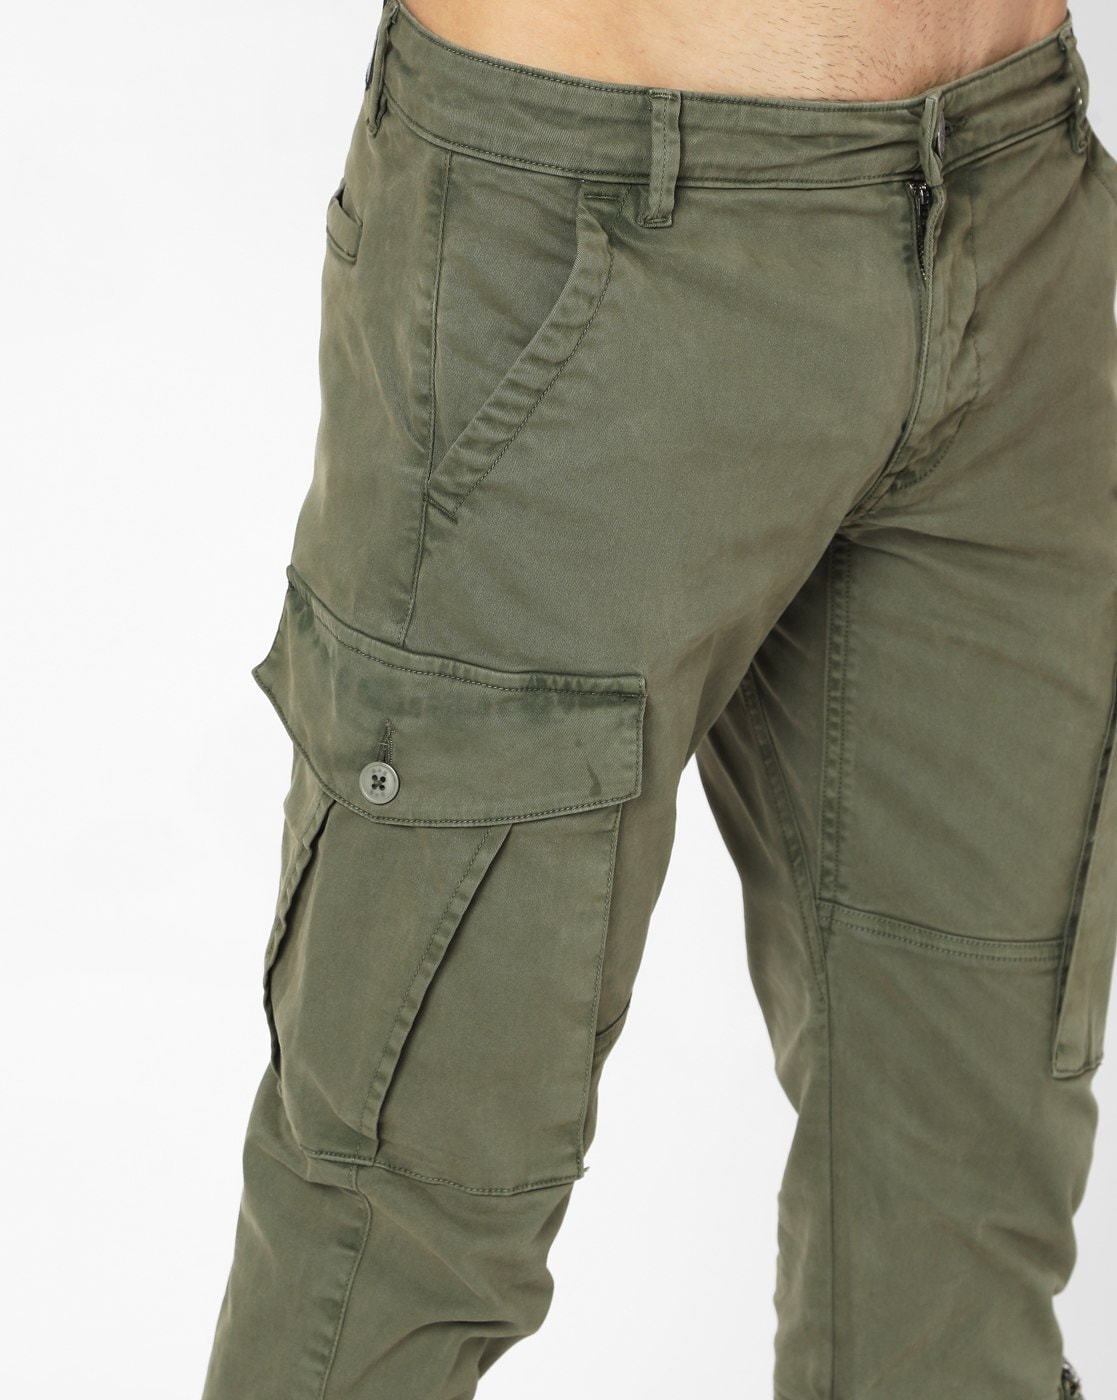 FABVIO PLUS Stylish Cargo Pants for Men NSLaycraCargoBlackM   Amazonin Clothing  Accessories